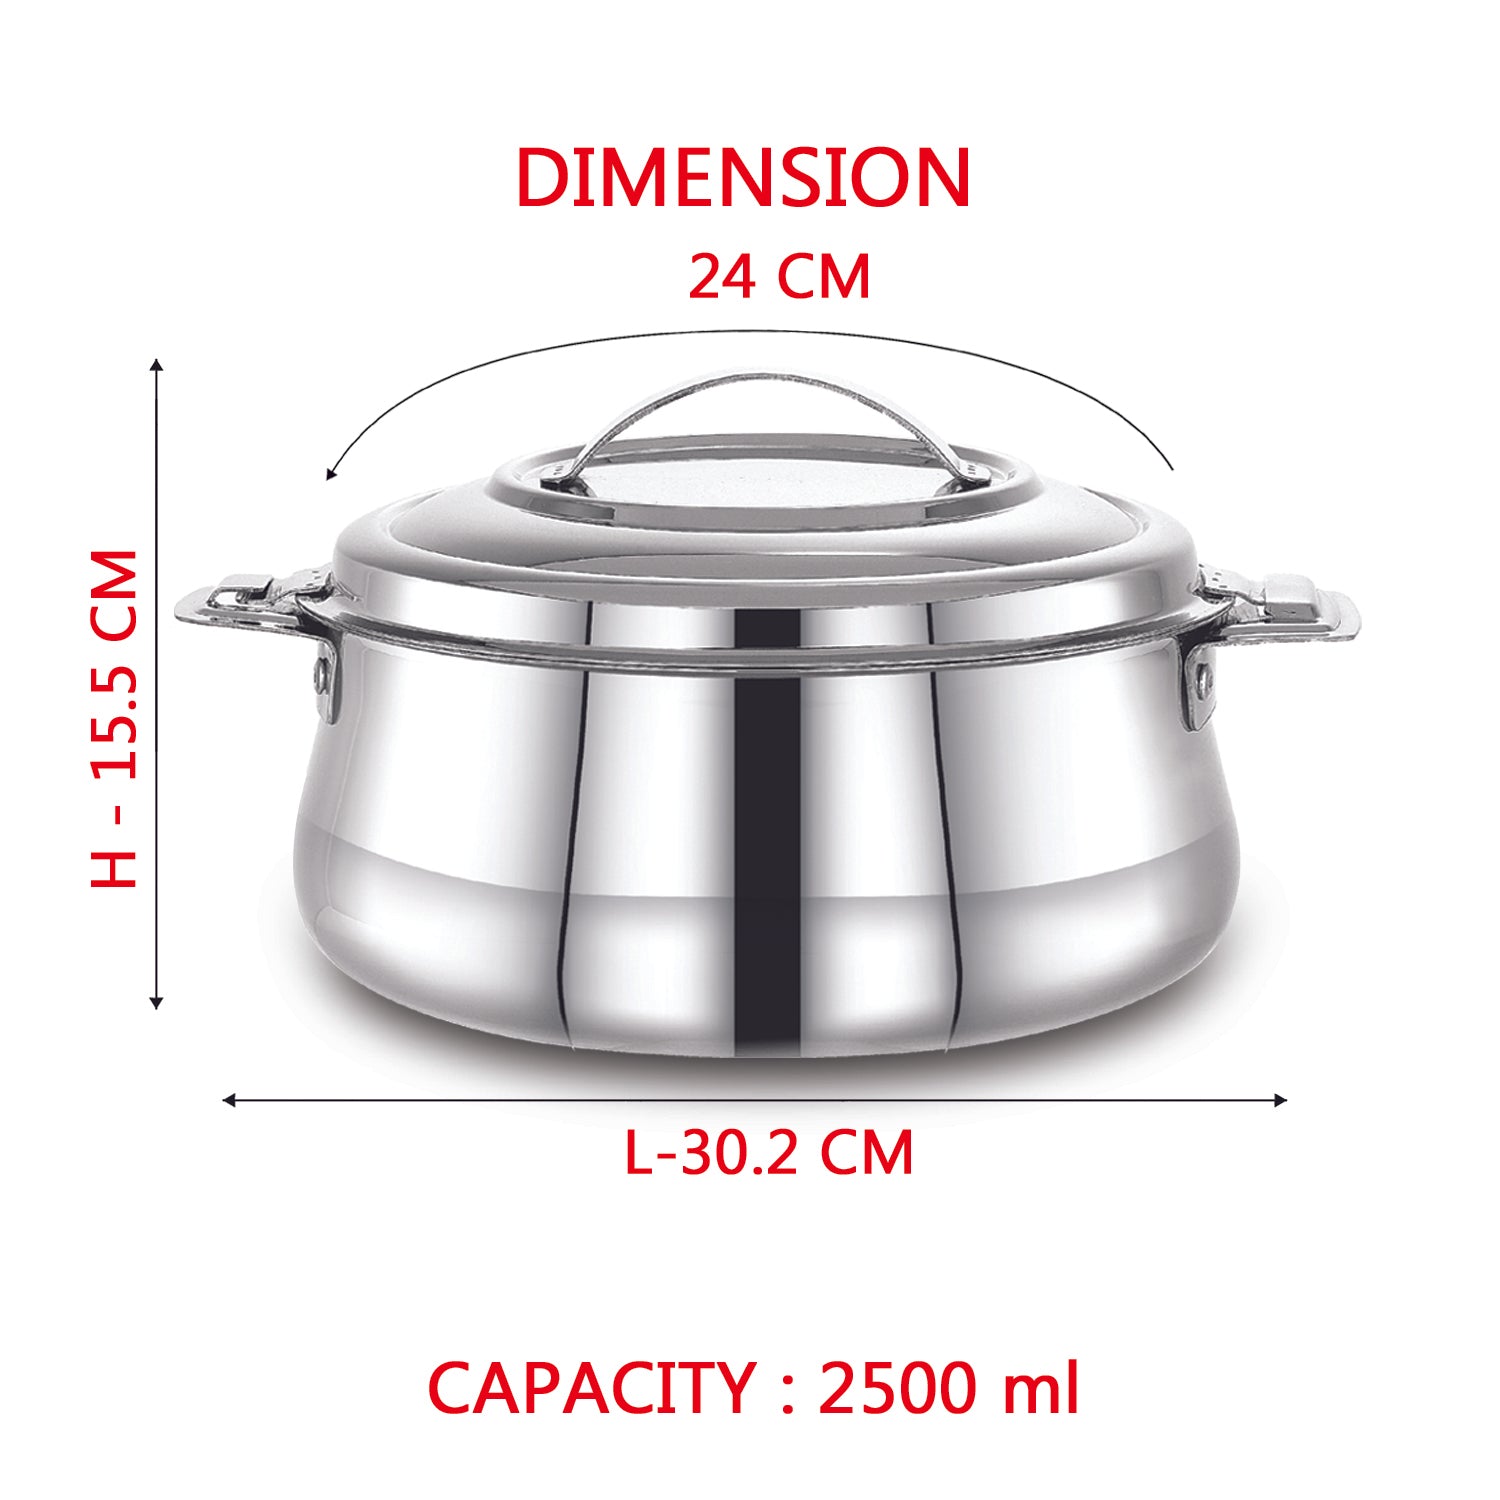 AVIAS Riara Silver Premium Stainless steel casserole 2500ml